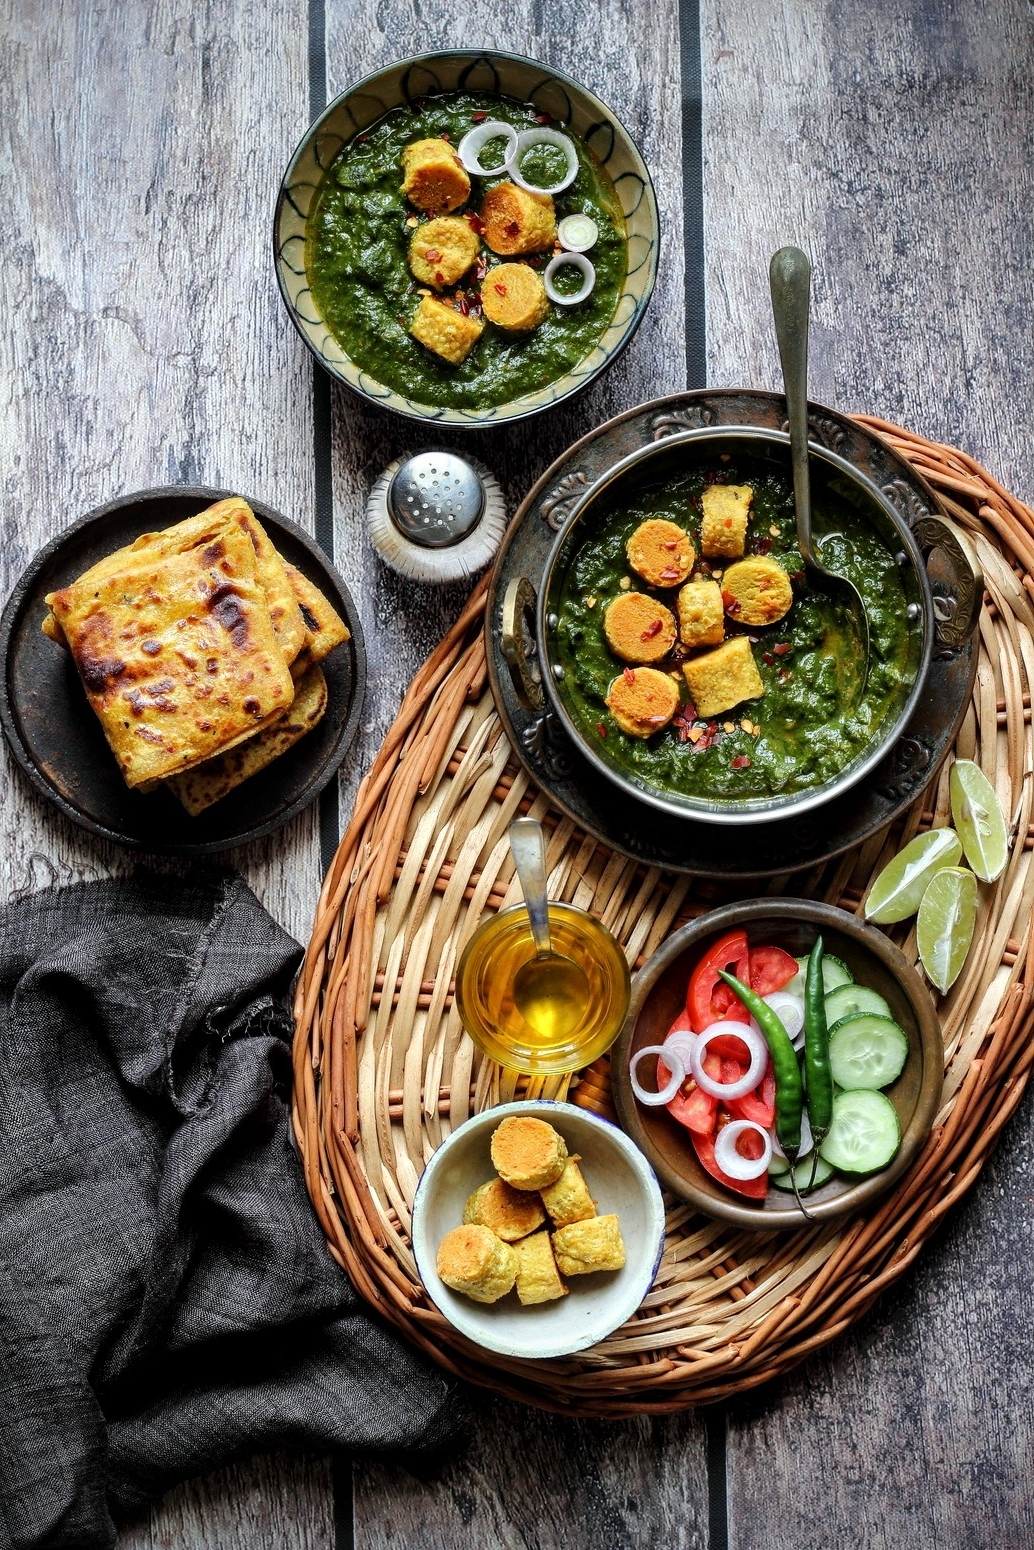 GATTE WALA PAALAK SAAG aur DAL KA PARANTHA – गॅट्टे वाला पालक साग और दाल का परांठा (Chickpea Flour Dumplings in Spinach Curry with Lentil Flatbreads)